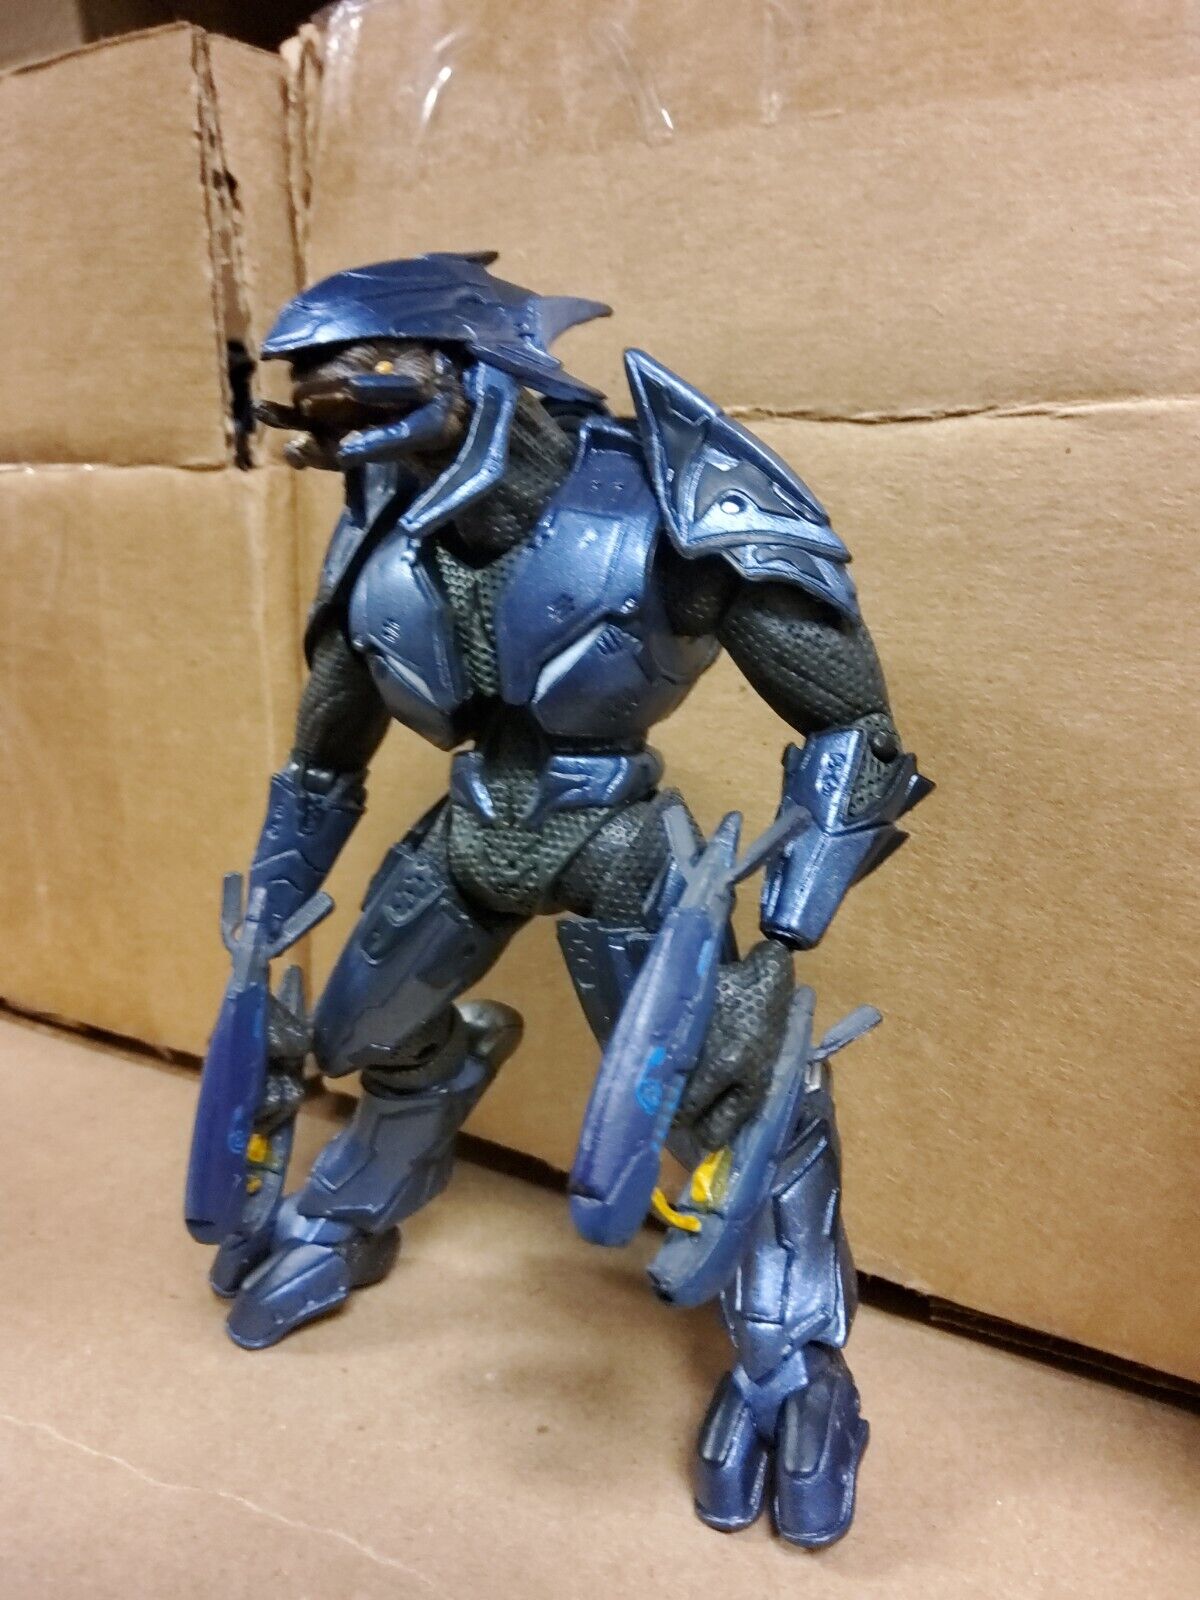 Combat Elite Blue Action Figure Halo 3 Series 3 McFarlane